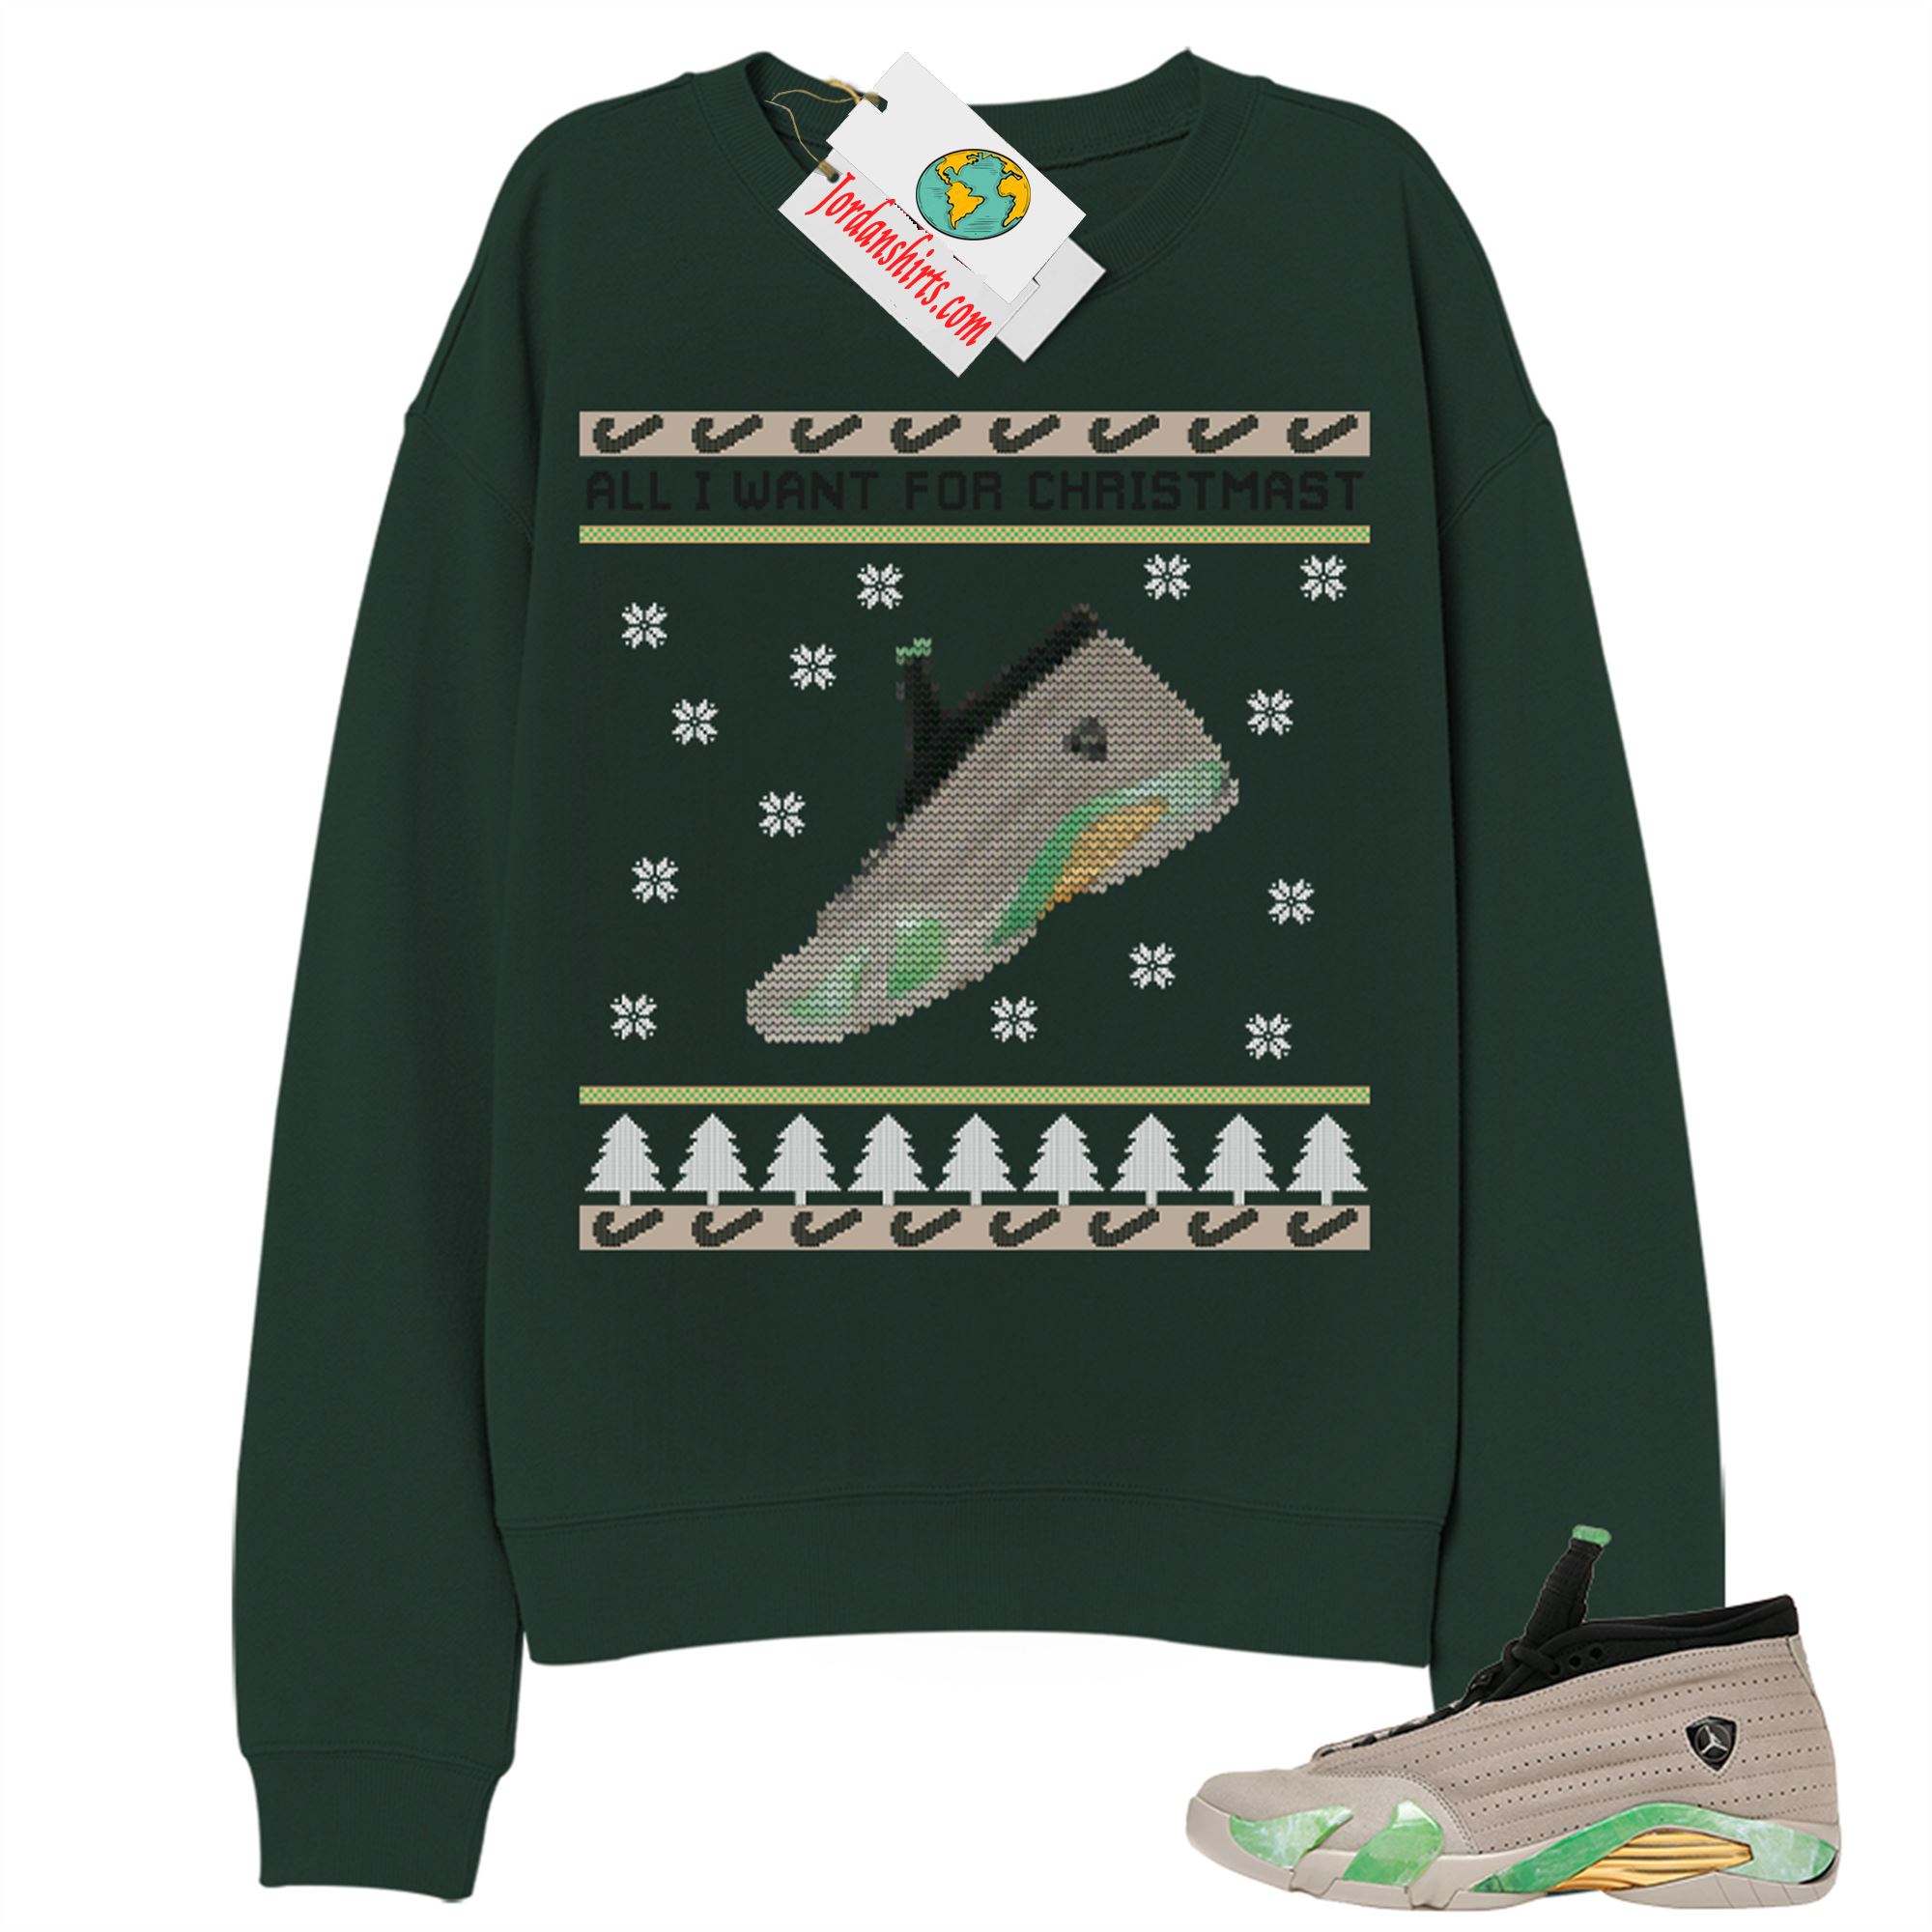 Jordan 14 Sweatshirt, Sneaker Ugly Christmas Shirt Green Sweatshirt Air Jordan 14 Aleali May Fortune 14s Plus Size Up To 5xl